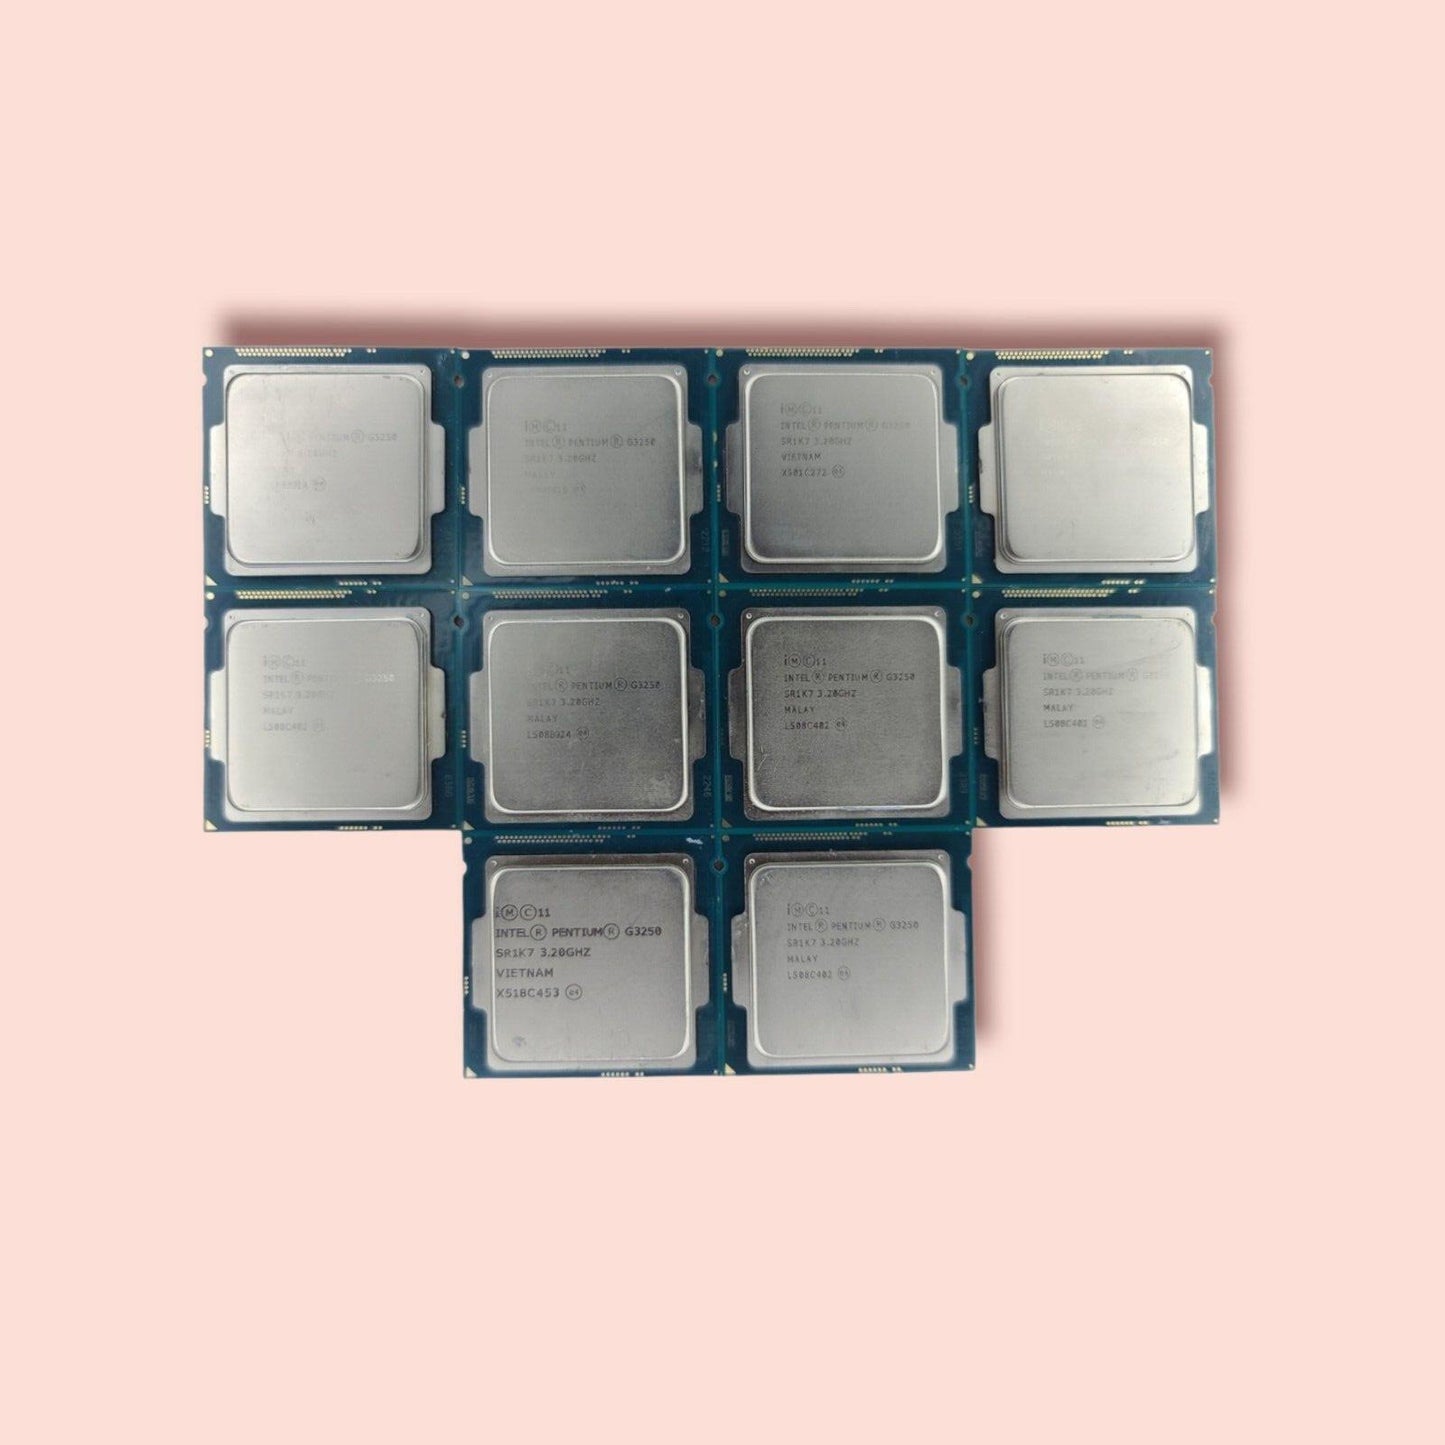 Lot of 10. Intel Pentium G3250 SR1K7 3.20GHz Dual-Core LGA 1150 Core Processor